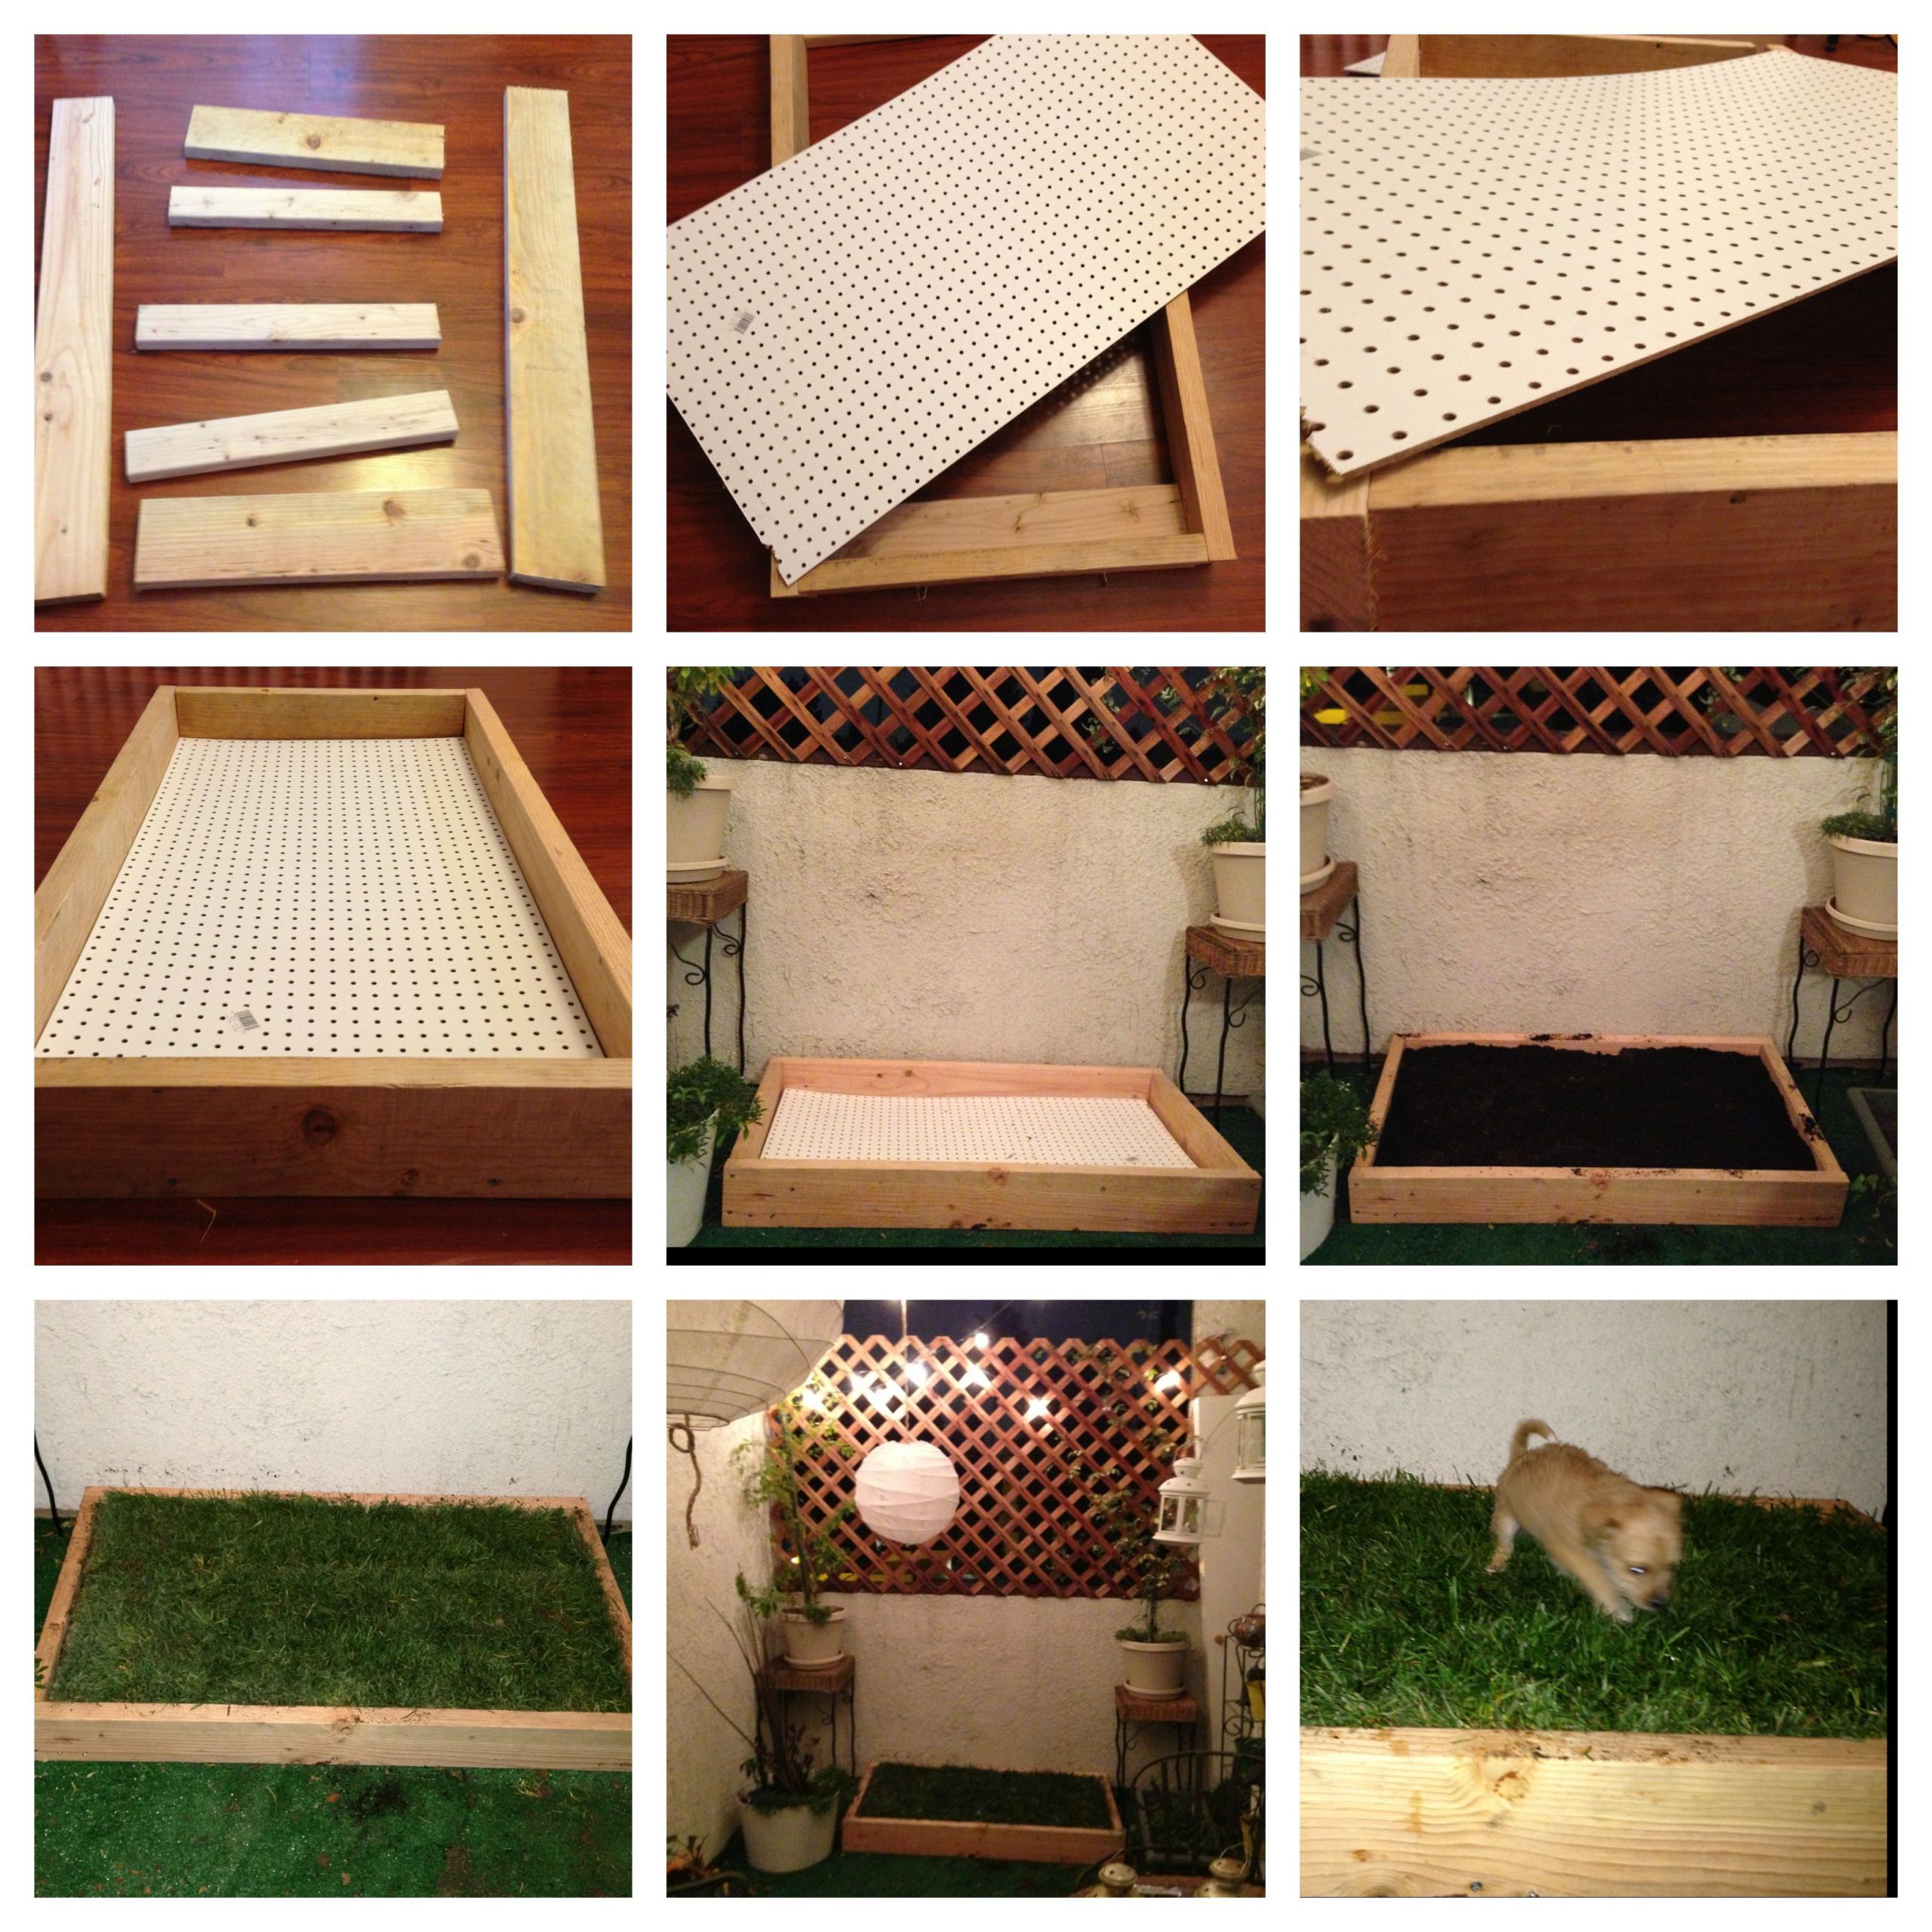 Dog Potty Grass DIY
 DIY dog grass box Easy to make and less than $40 at Home